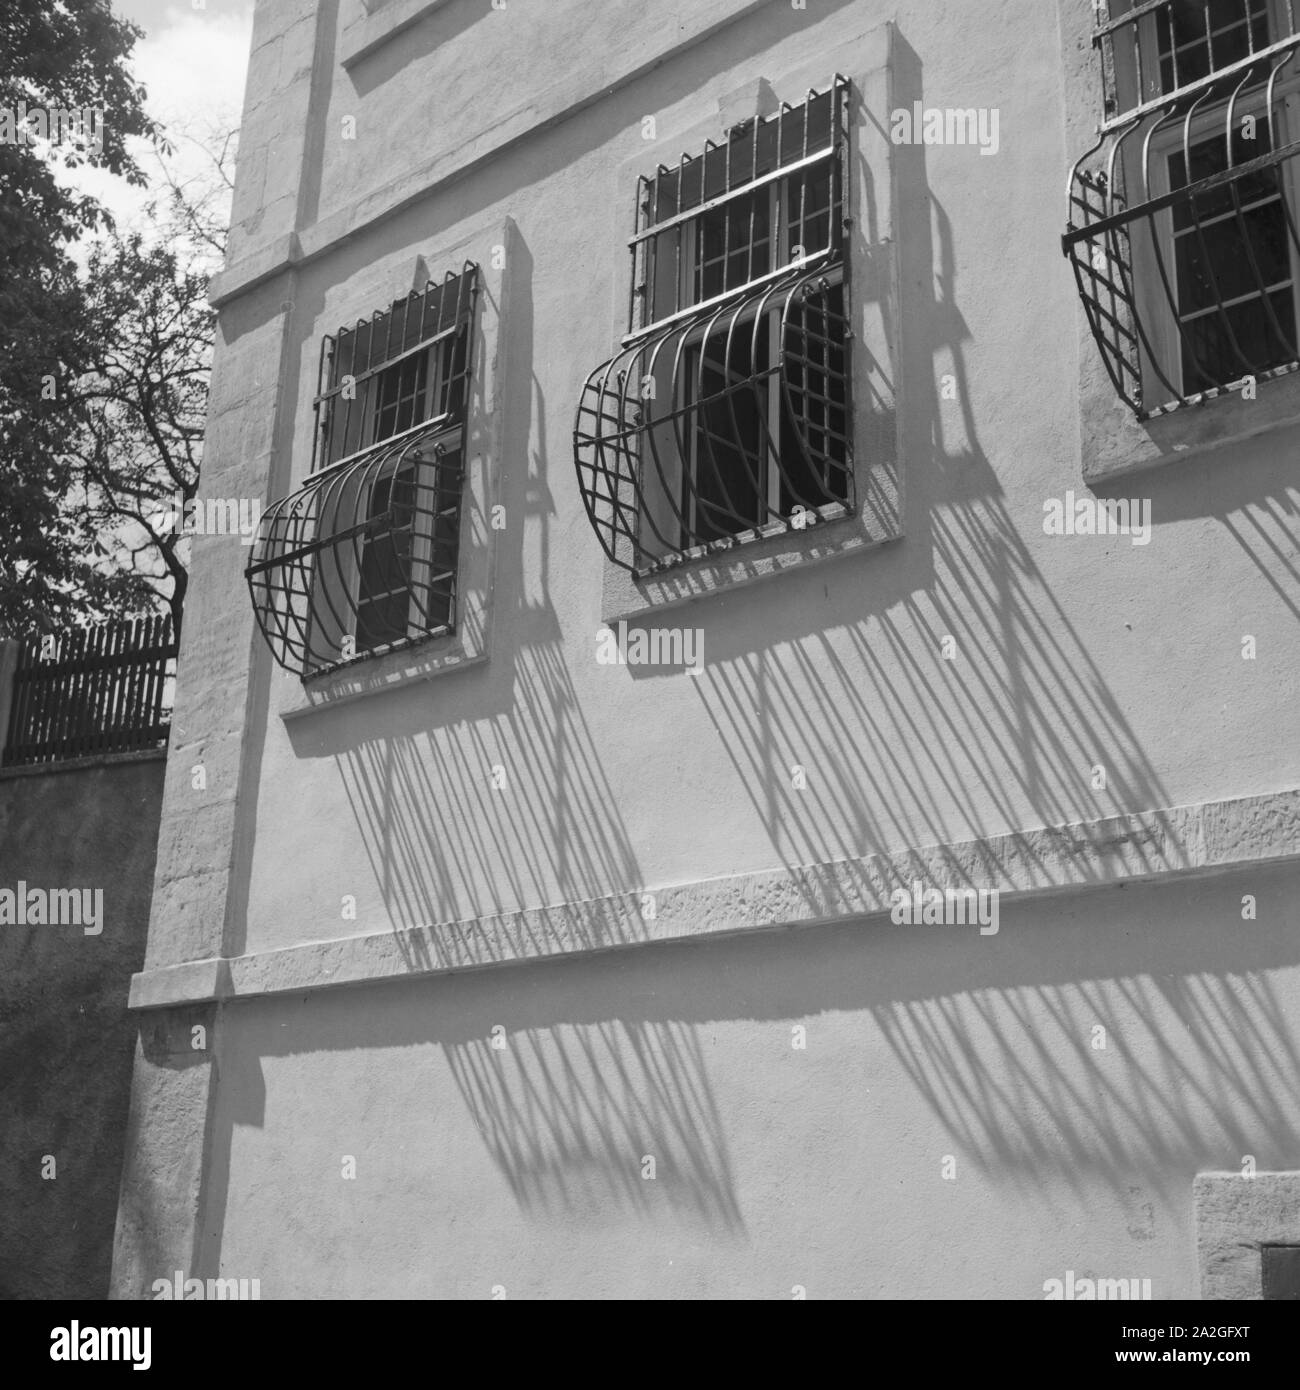 Vergitterte Fenster im Erdgeschoss eines Hauses, Deutschland 1930er Jahre. Finestre sbarrate nel seminterrato di un edificio, Germania 1930s. Foto Stock